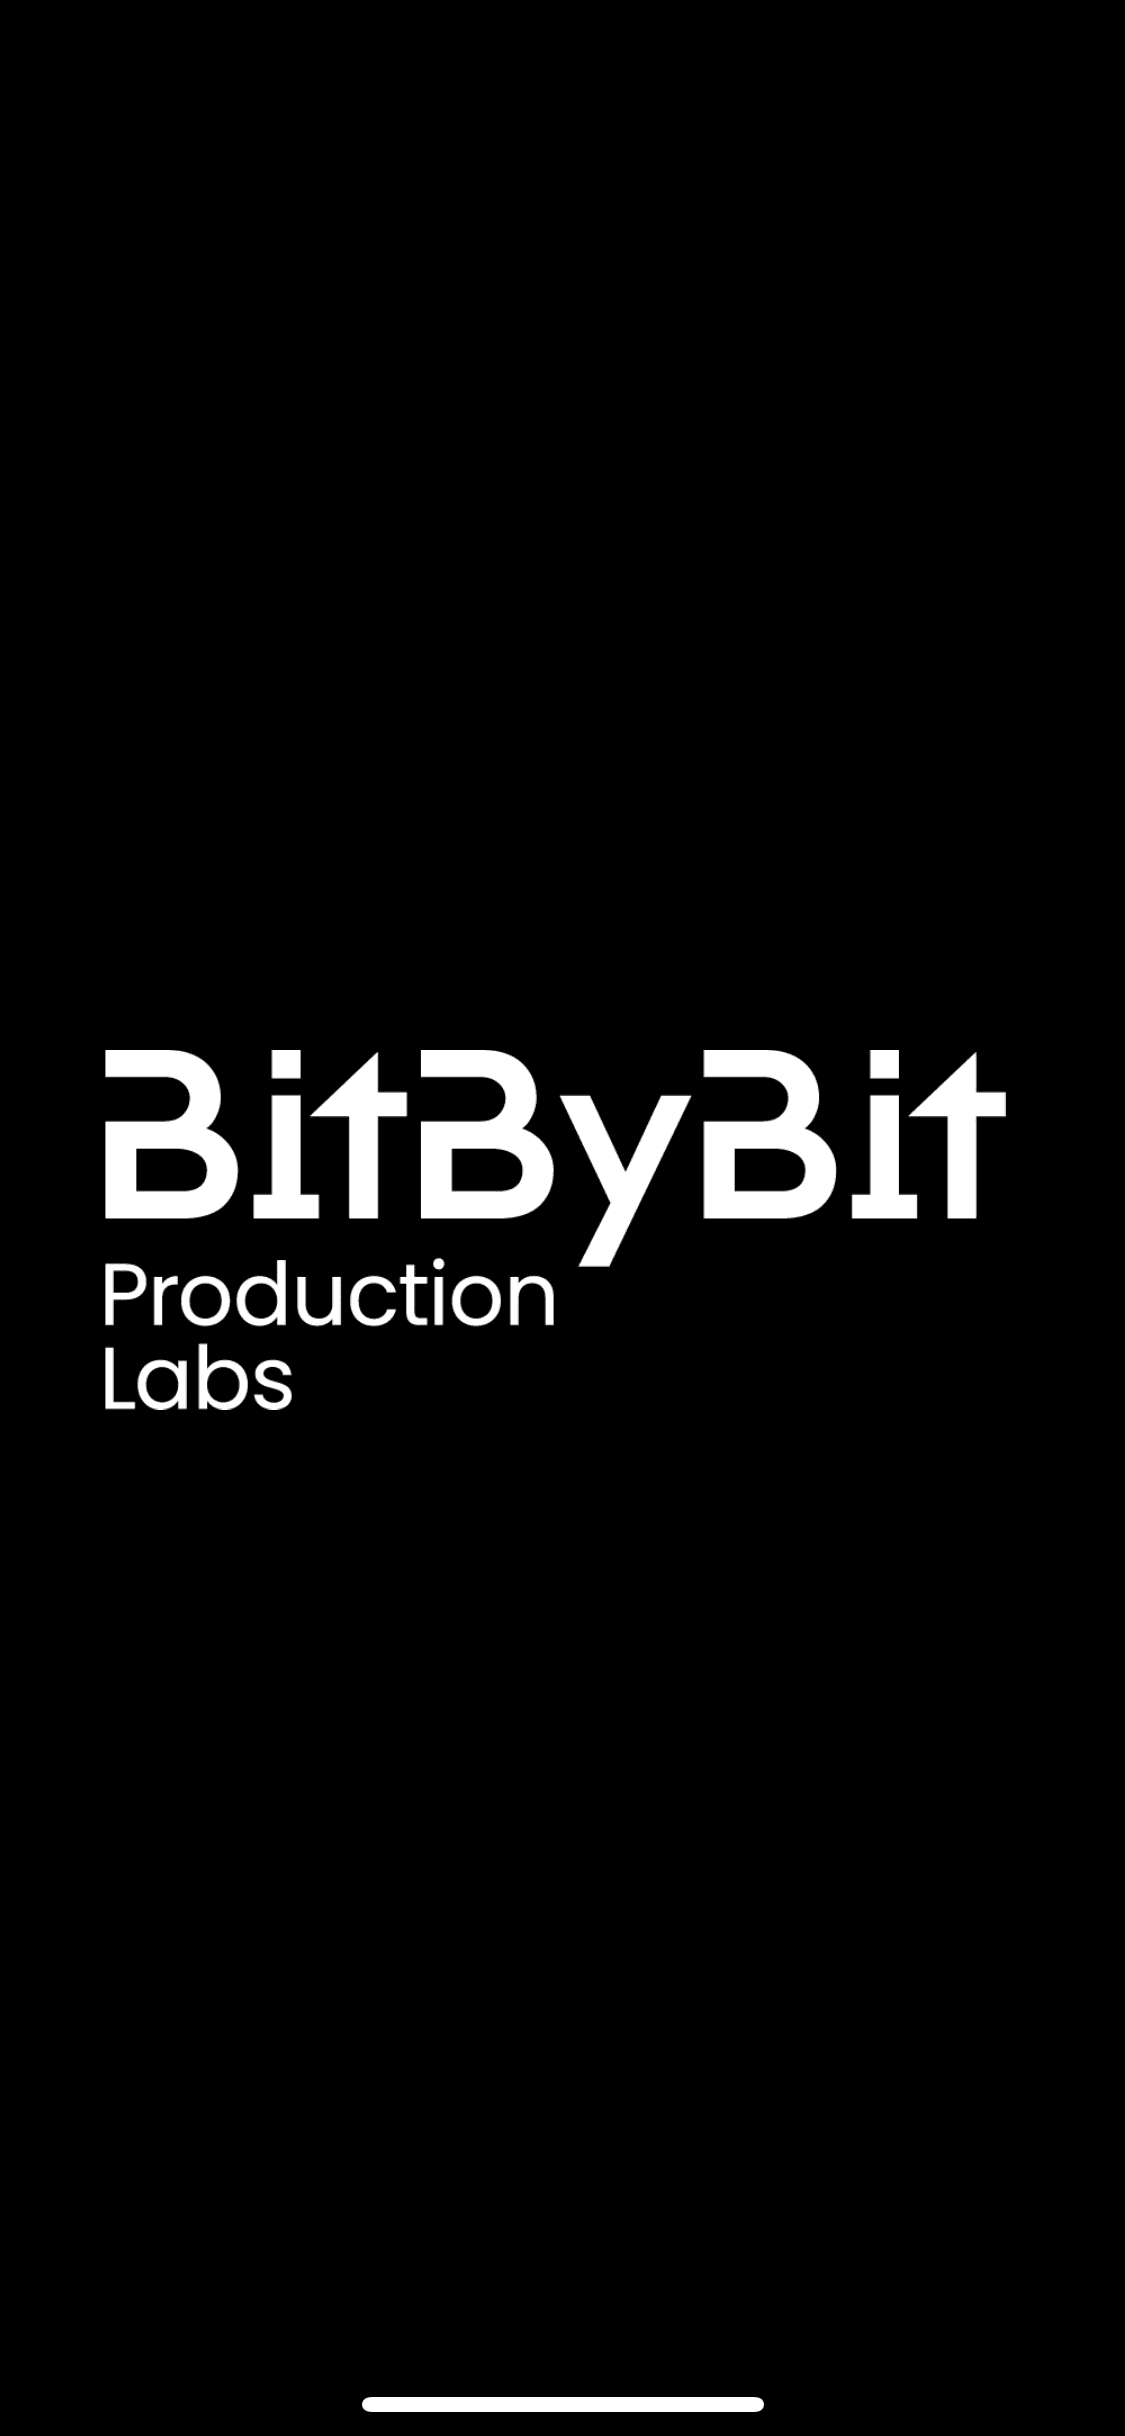 BitByBit_Production_Labs 横幅